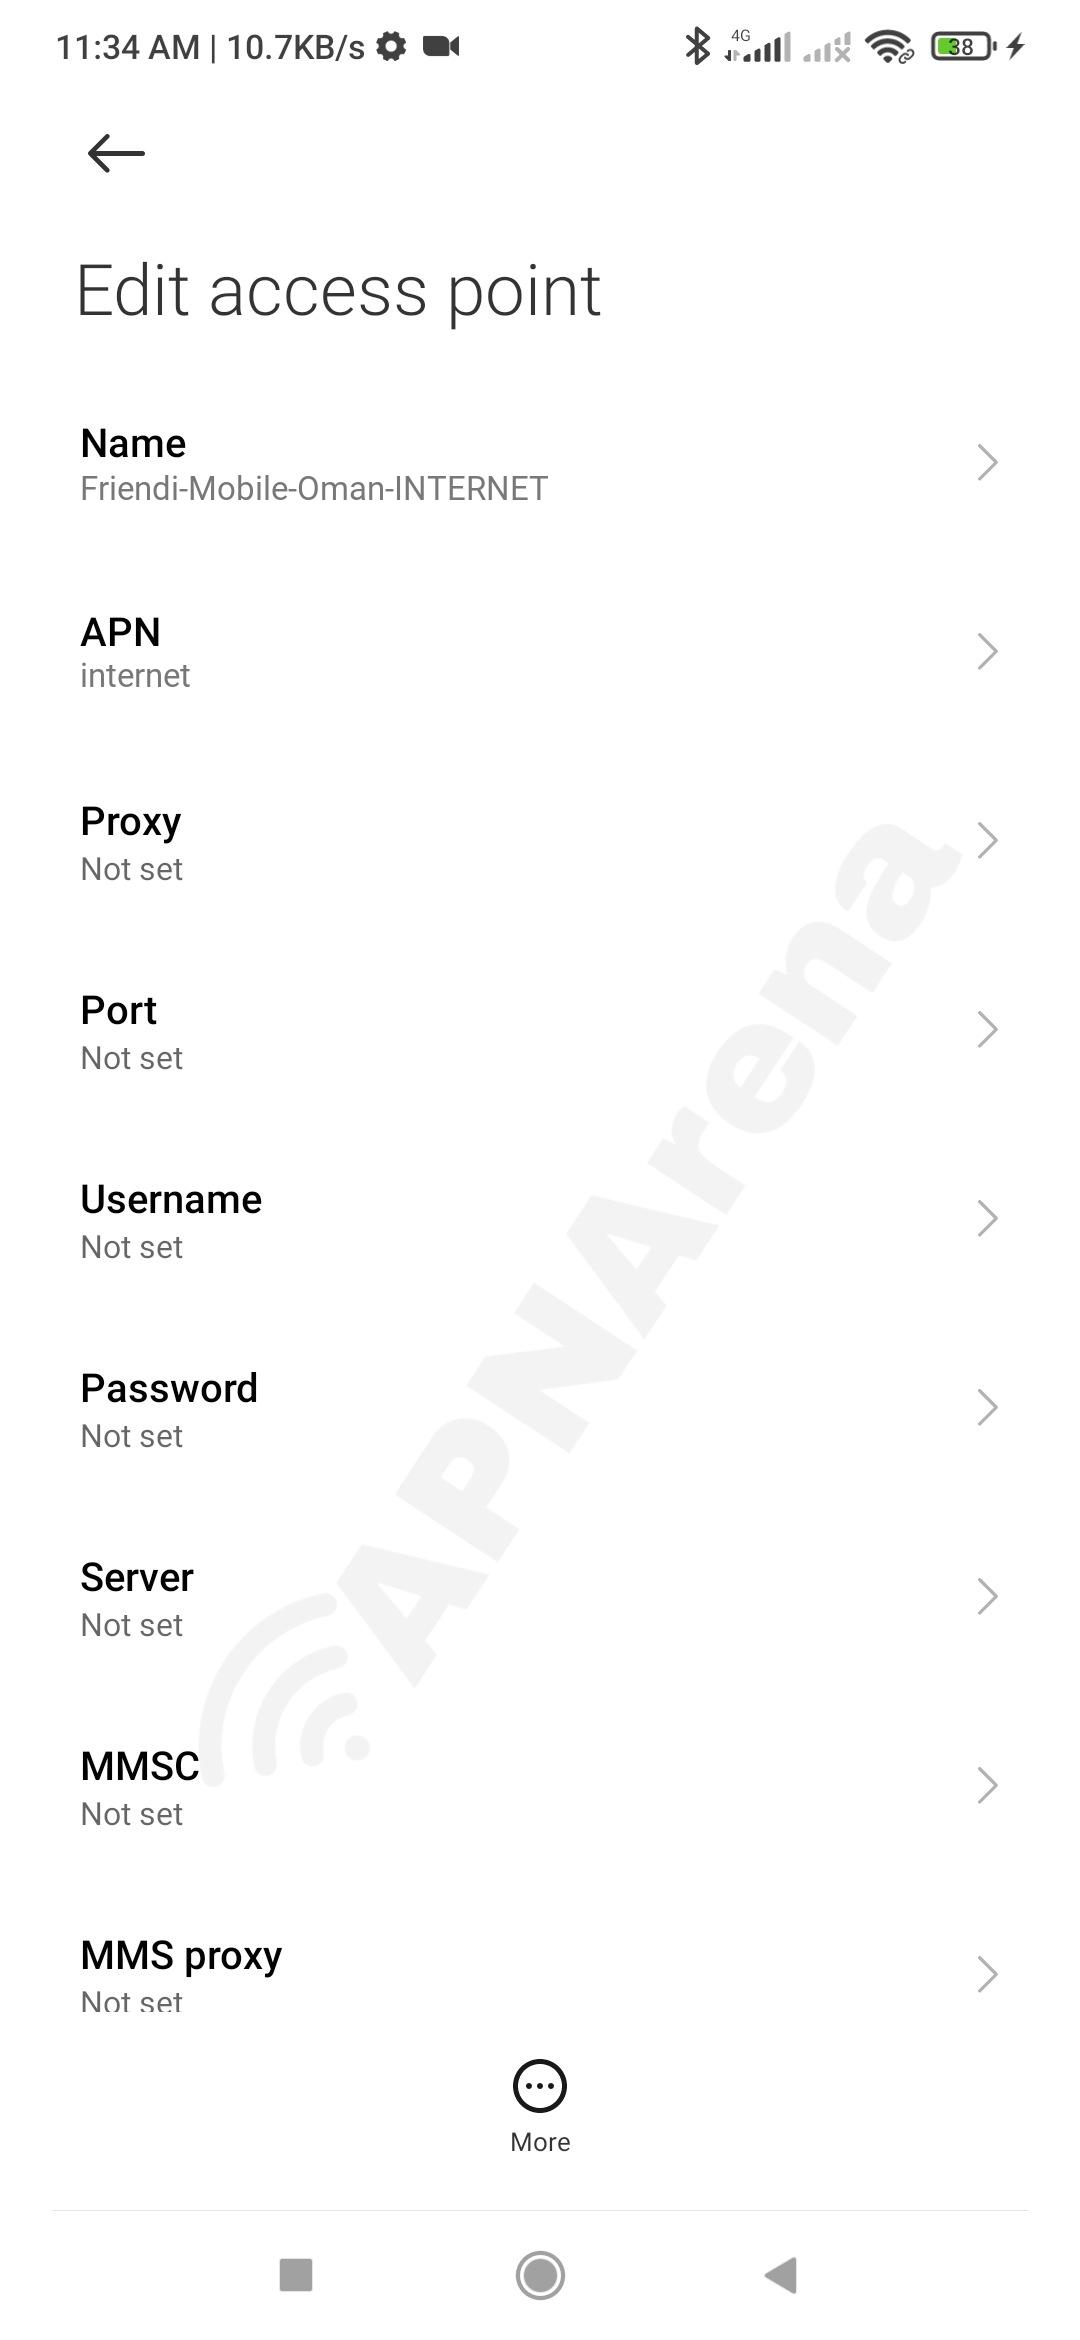 Friendi mobile Oman APN Settings for Android